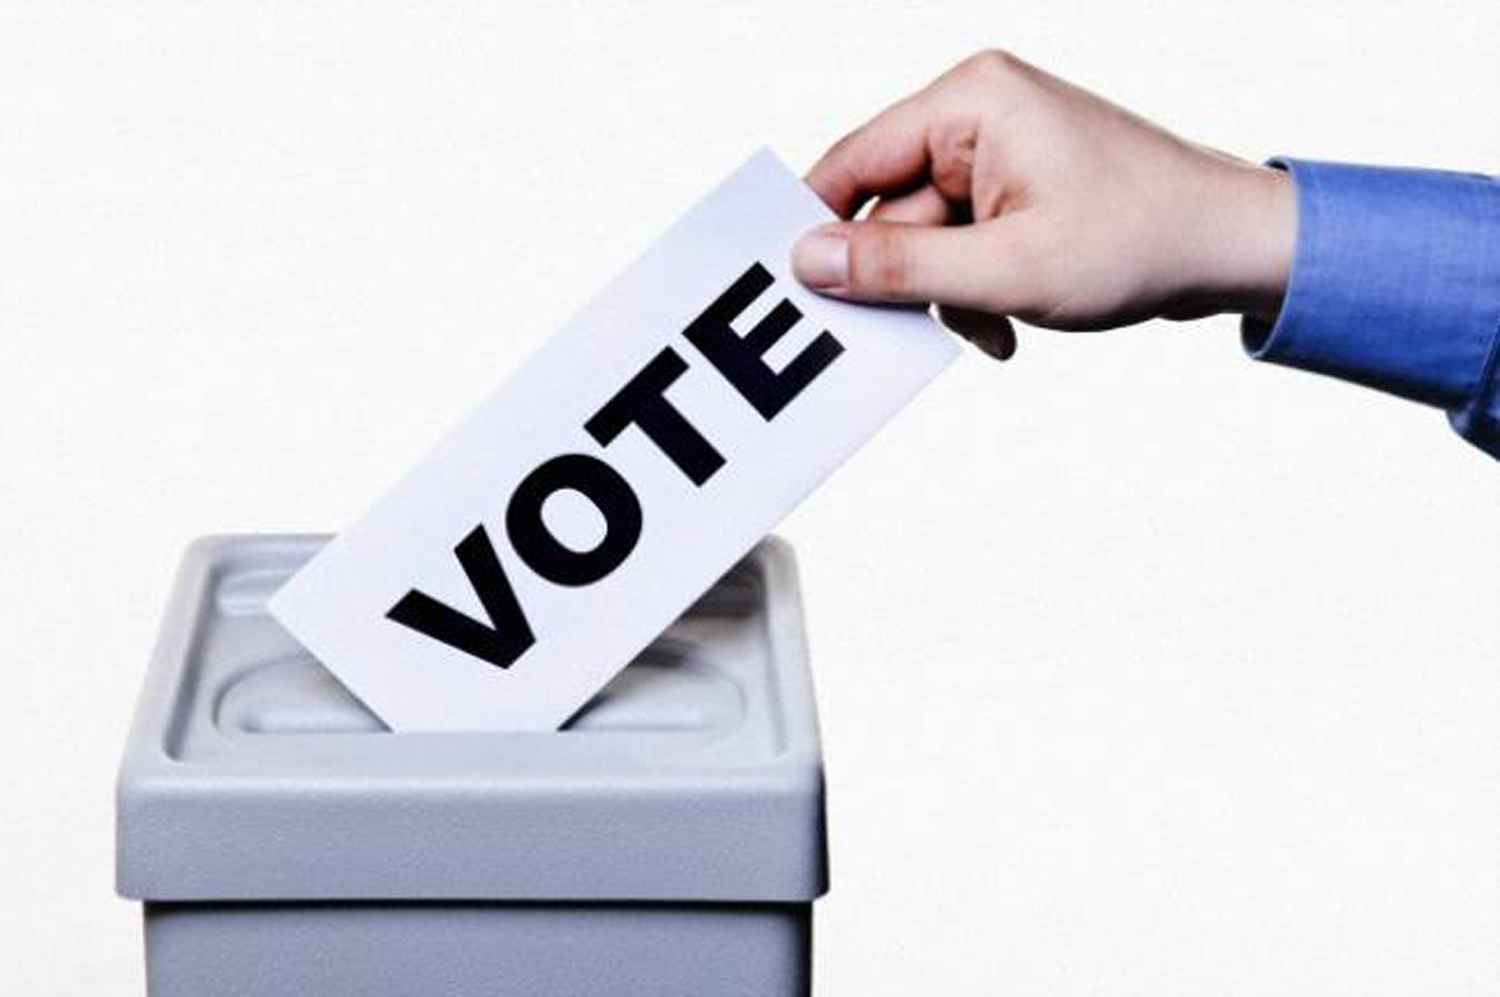 Page votes. Local elections знак. Бумага для голосования. Poll vote. Ballot Box.